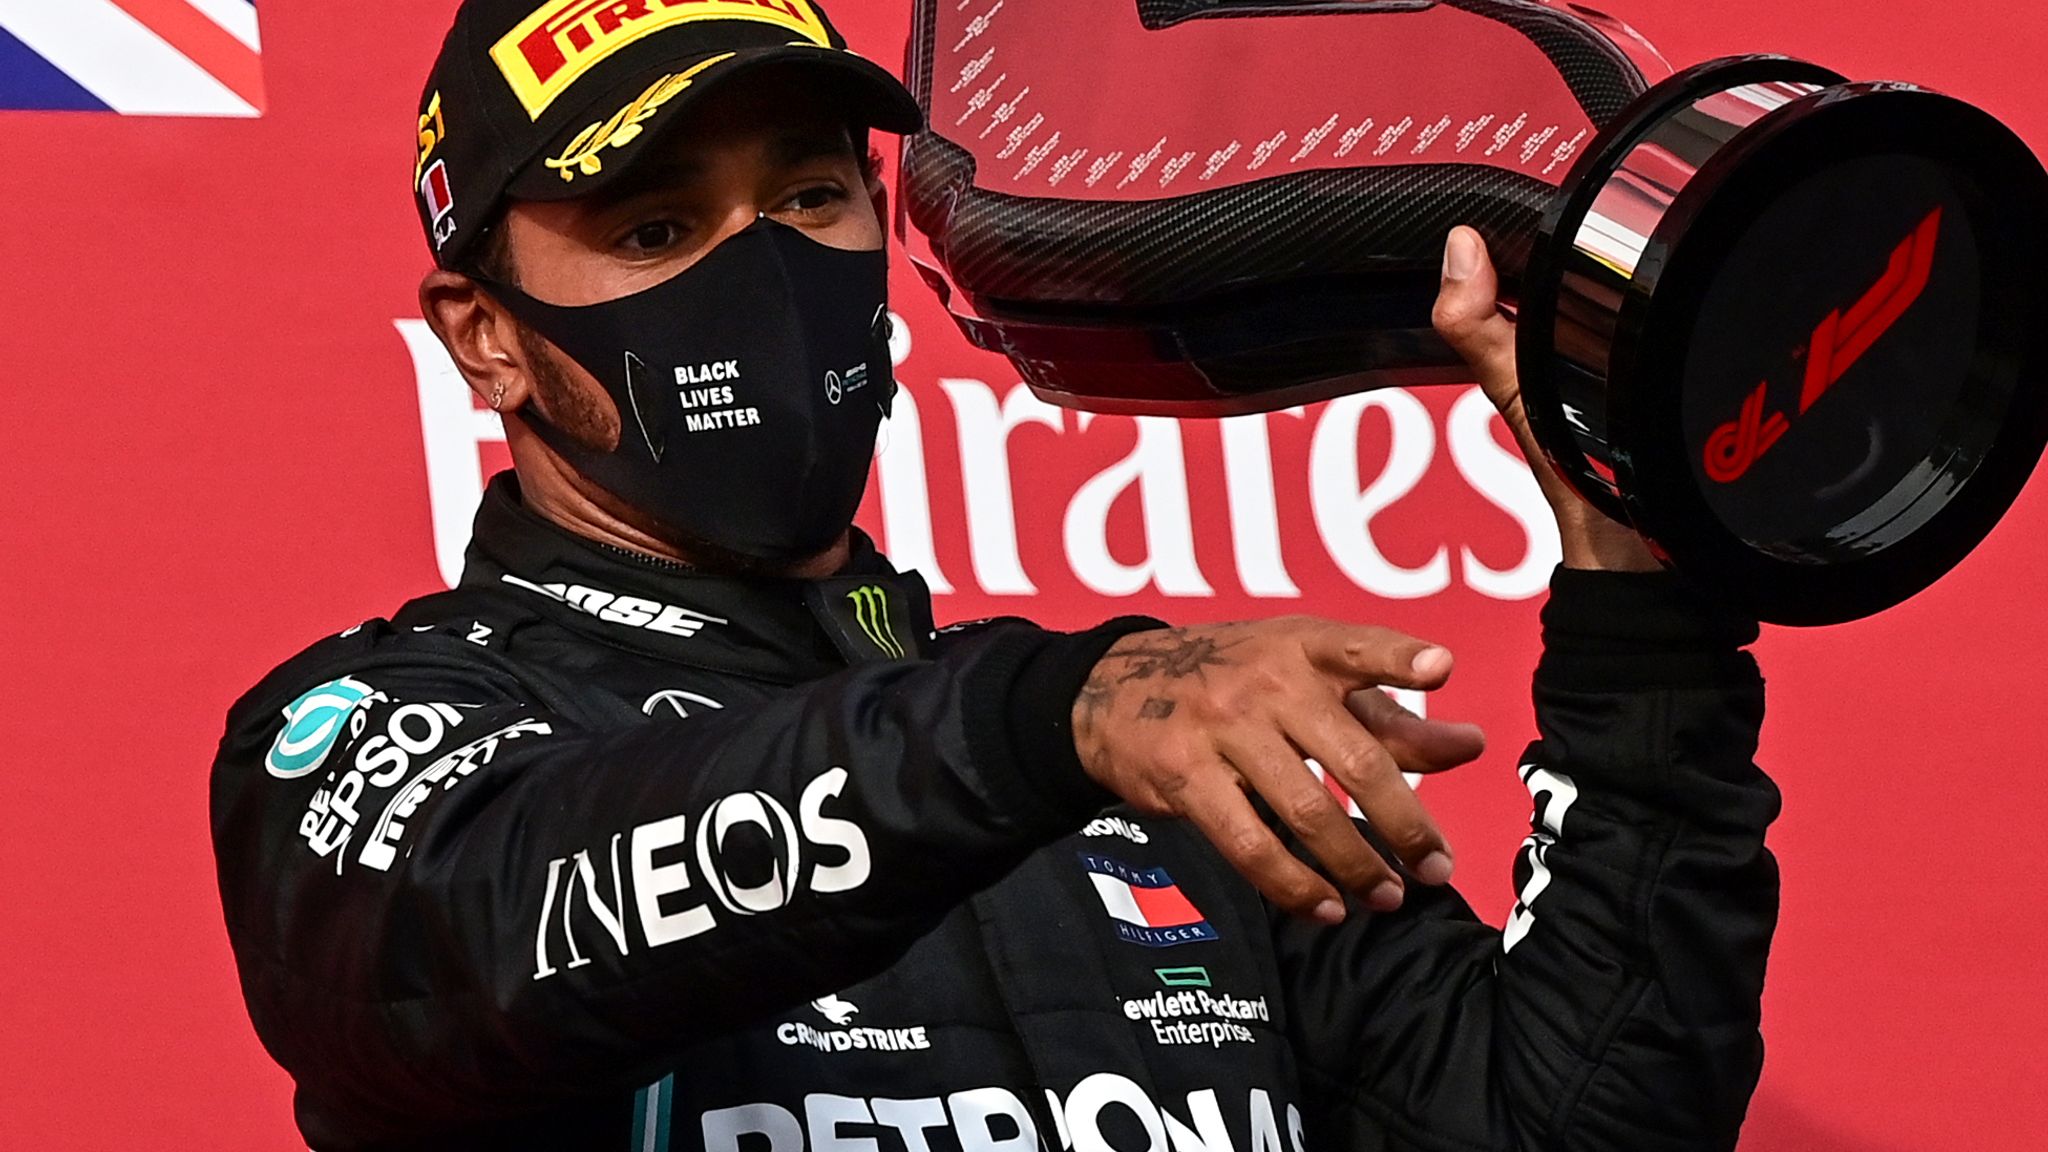 Lewis Hamilton is nearing retirement - Webber